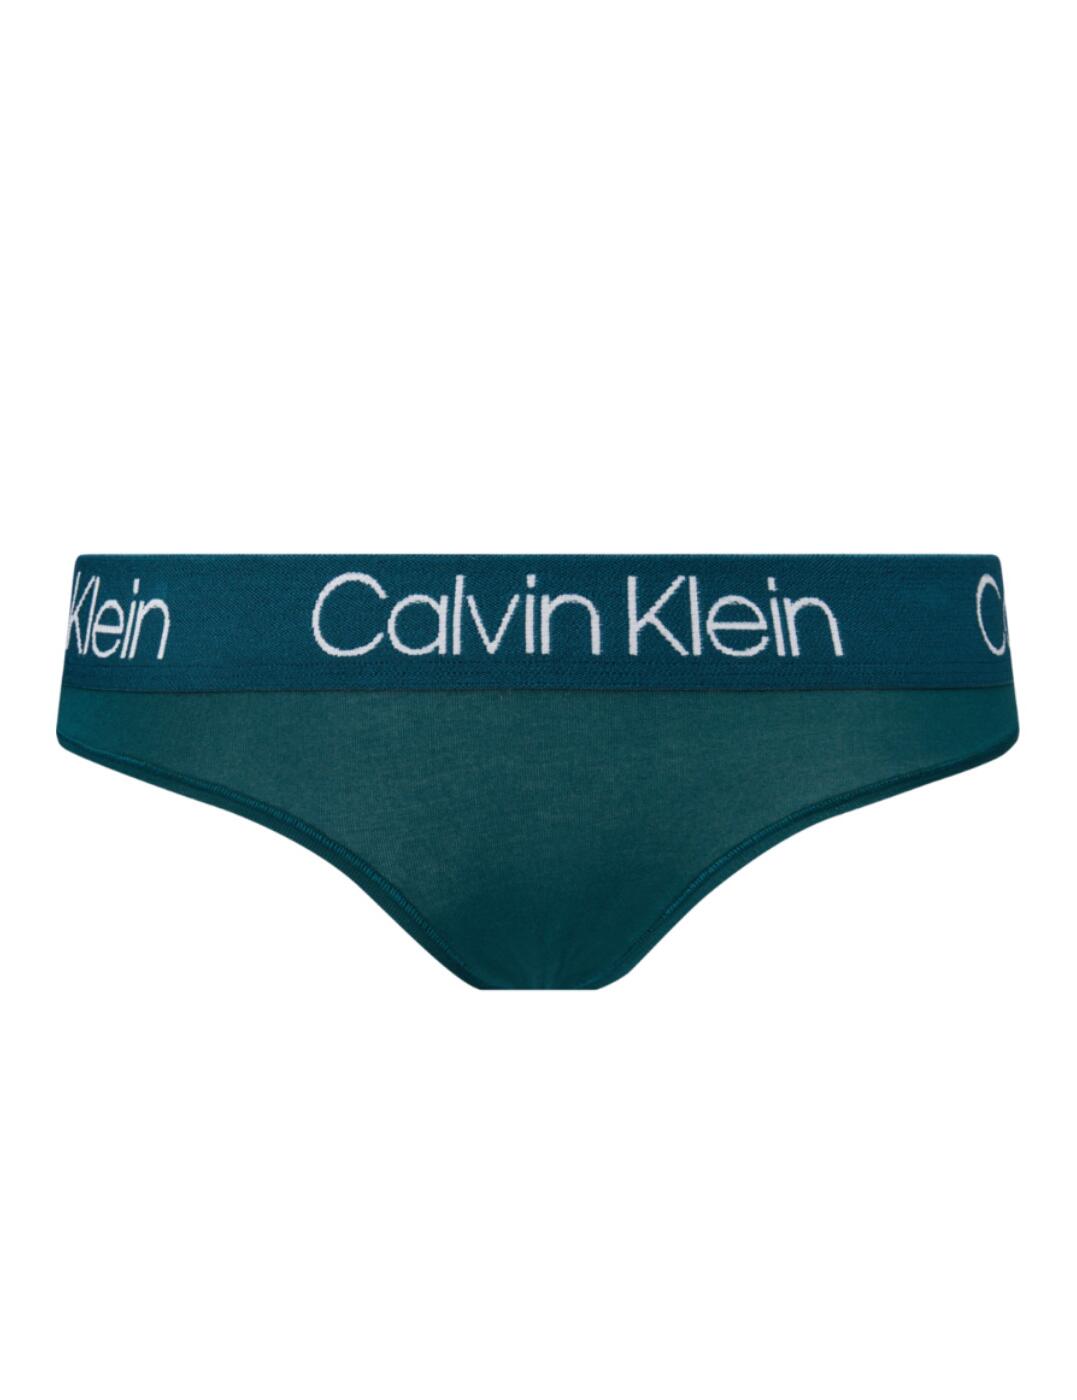 Calvin Klein Body Brief Sea Serpent 